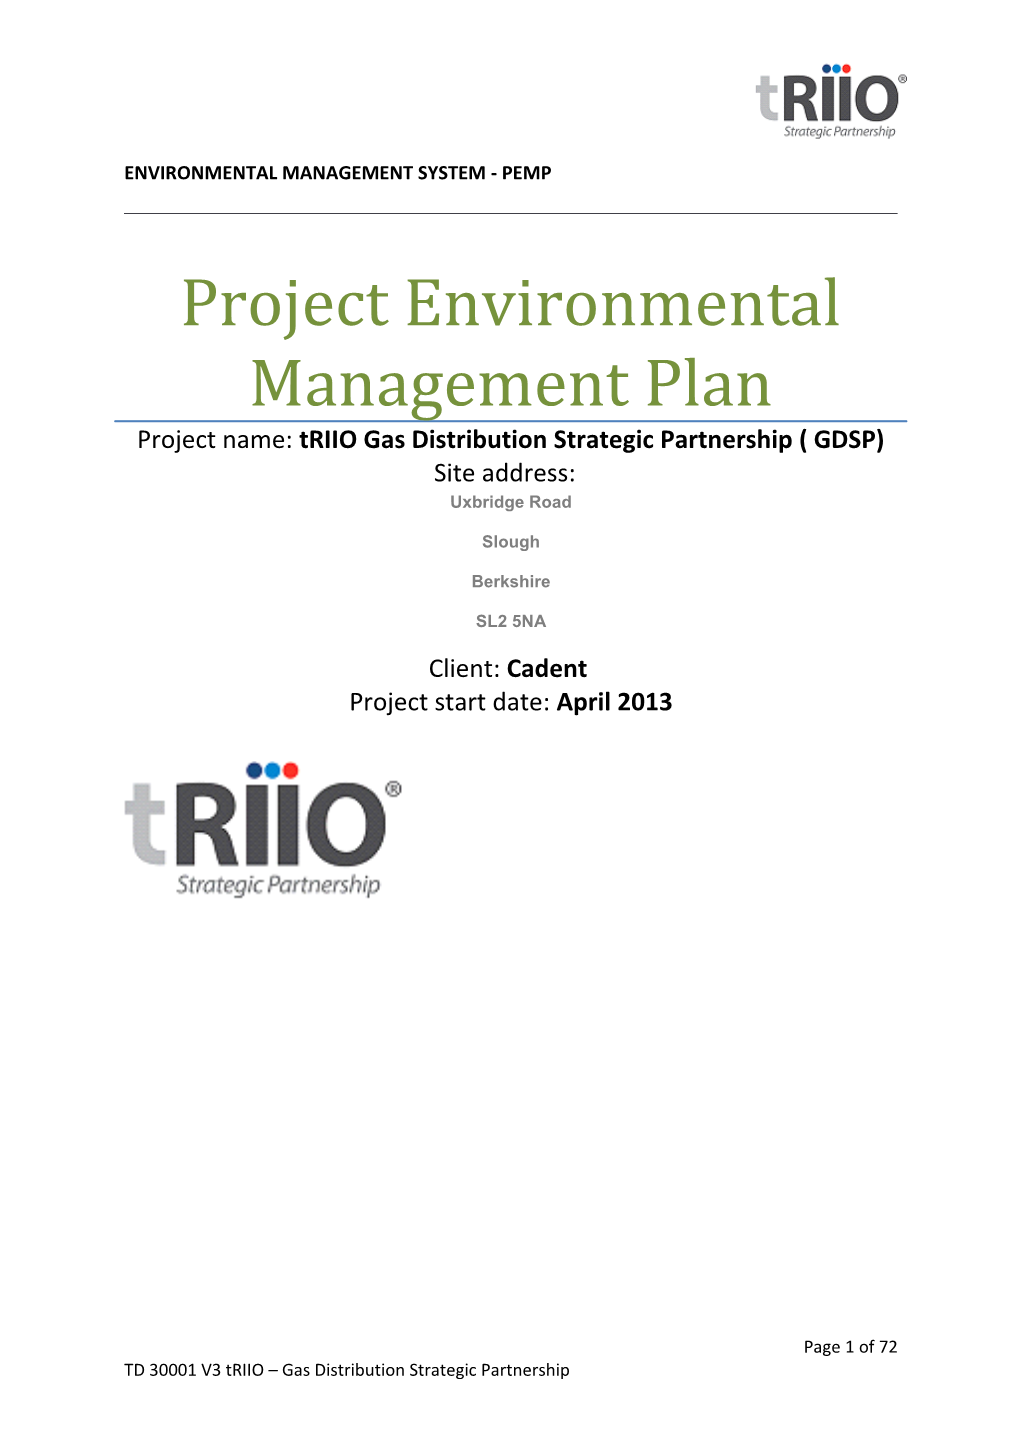 Project Environmental Management Plan